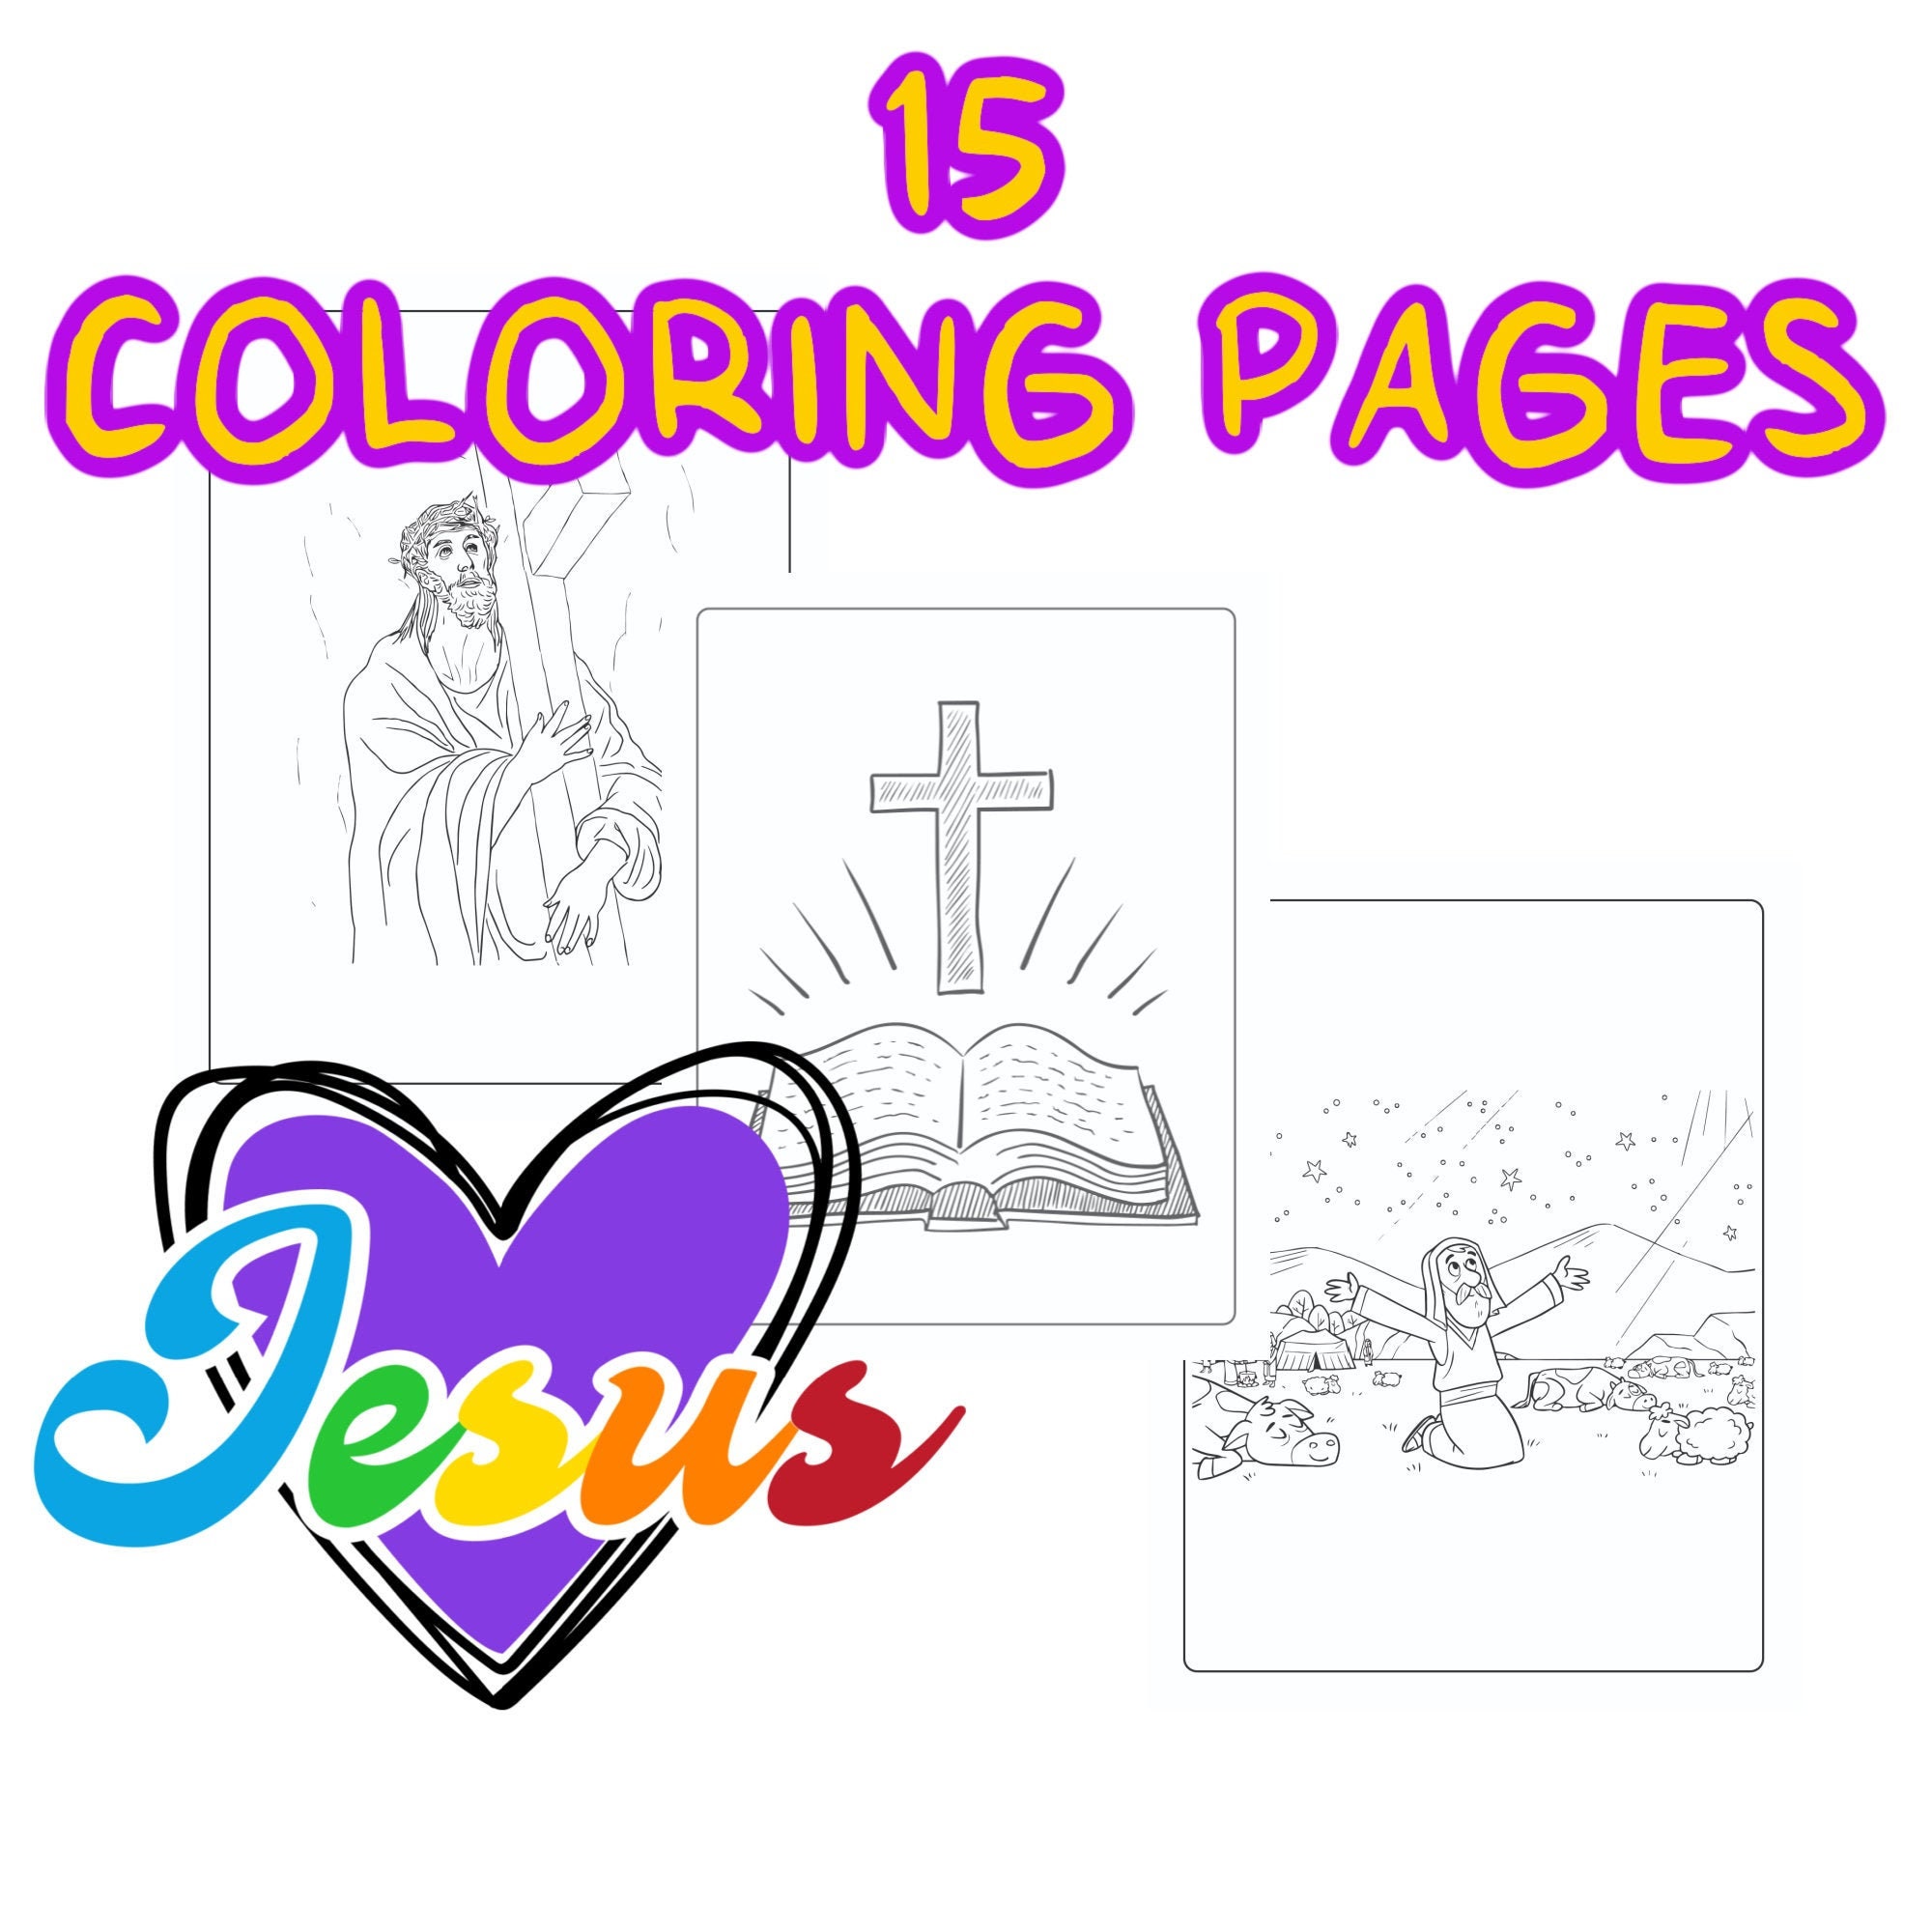 coloring pages sunday school preschool